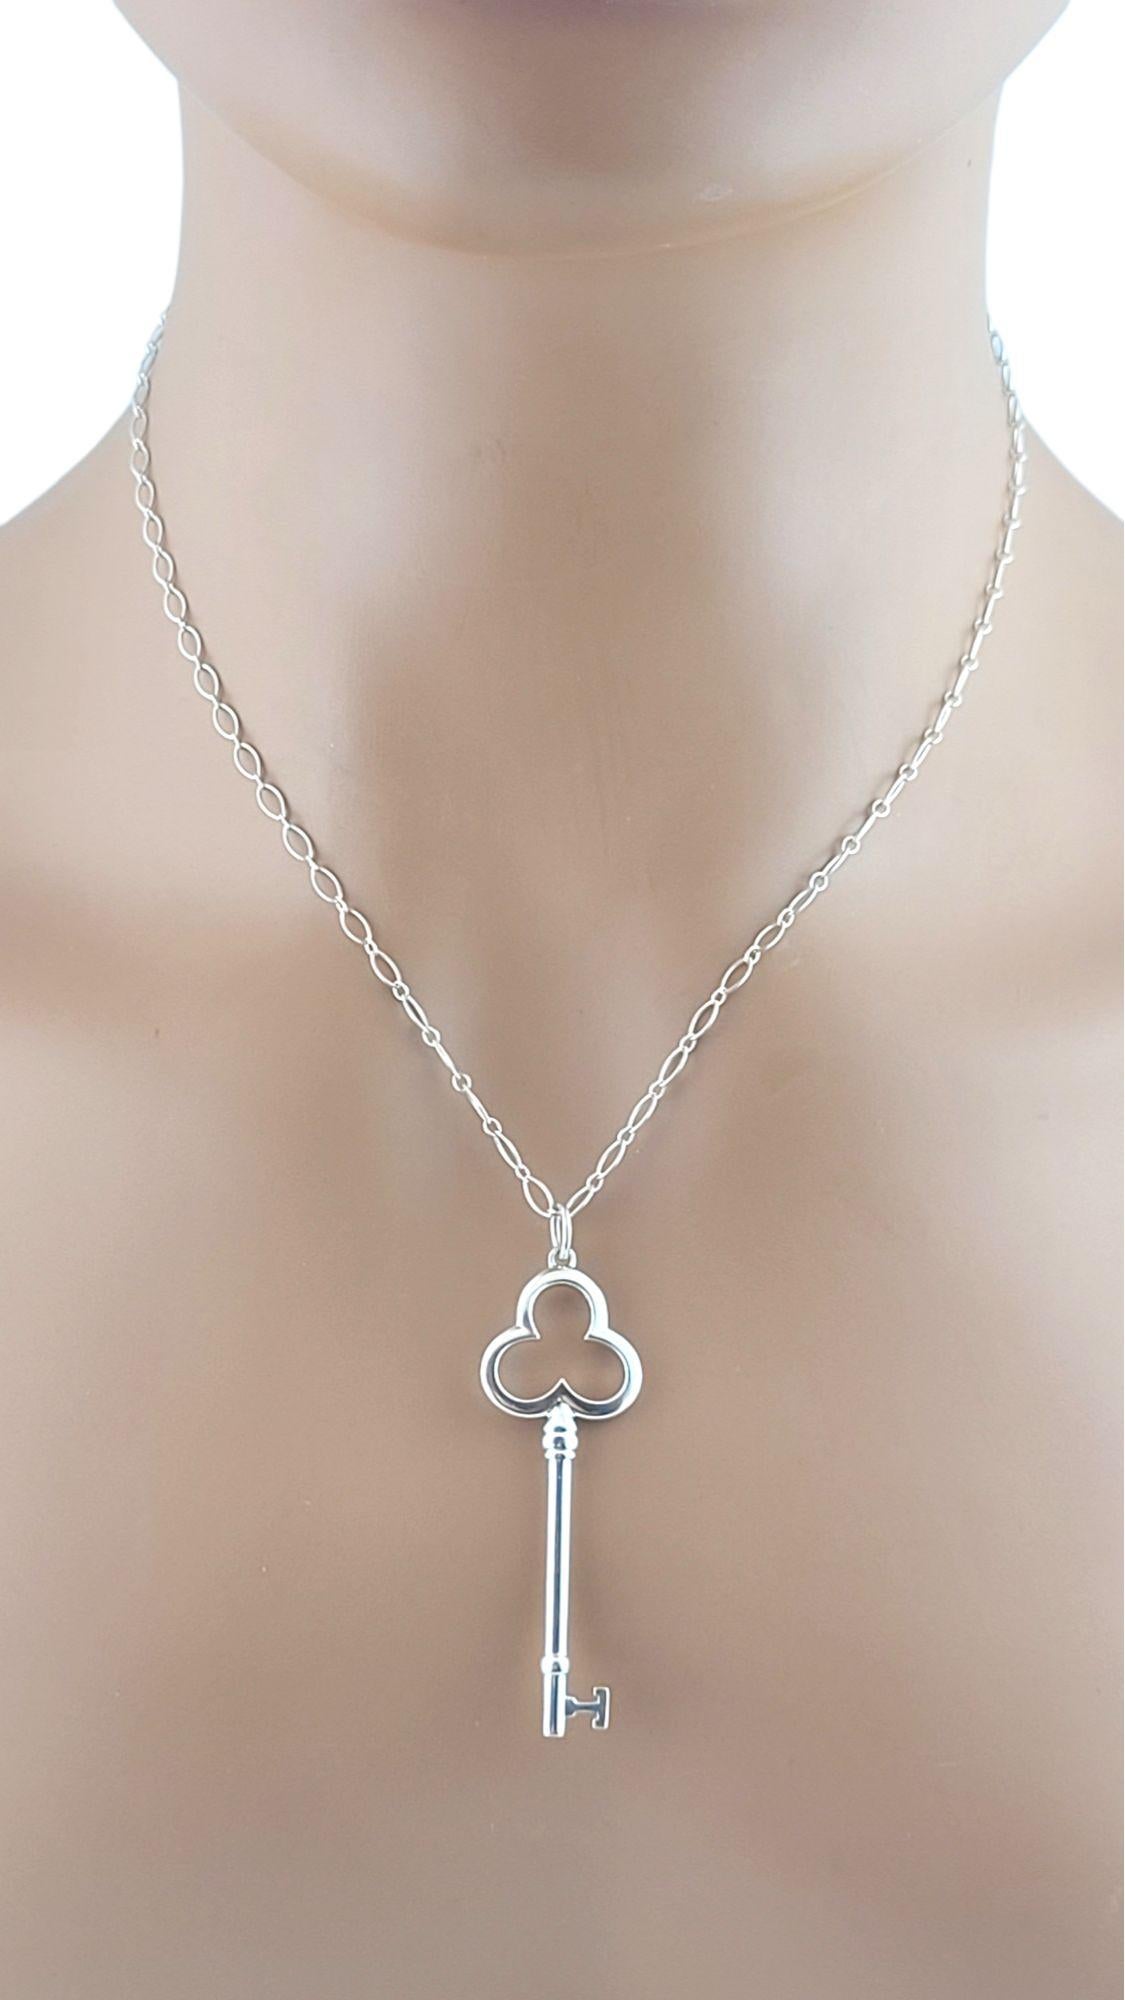 Tiffany & Co Sterling Silver Clover Trefoil Key Pendant Necklace #14574 For Sale 2